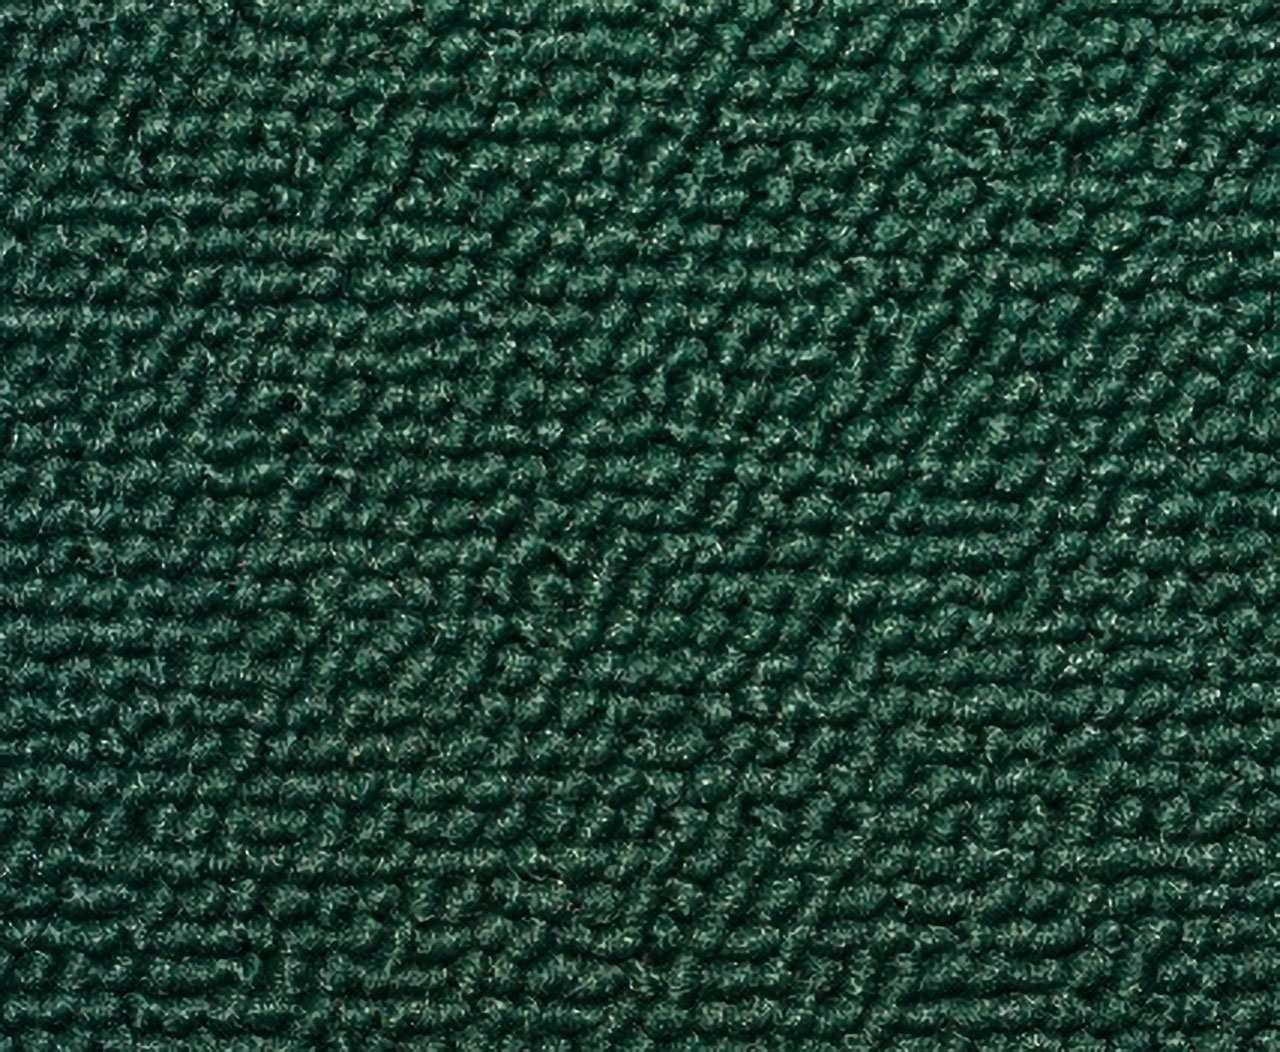 Holden Monaro HG Monaro GTS Coupe 16X Venetian Green Carpet (Image 1 of 1)